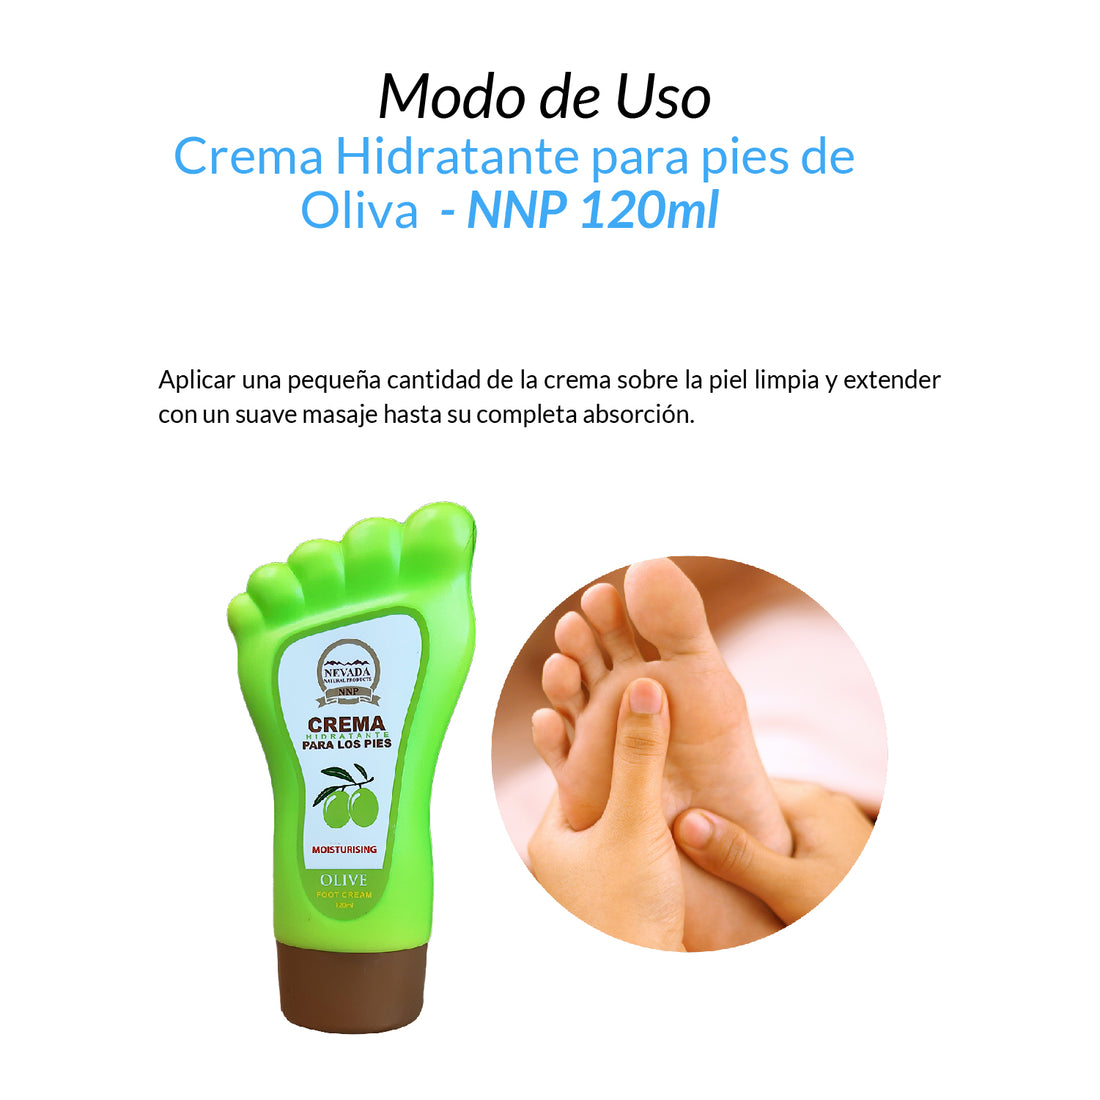 Crema Hidratante para pies de Oliva - NNP 120ml